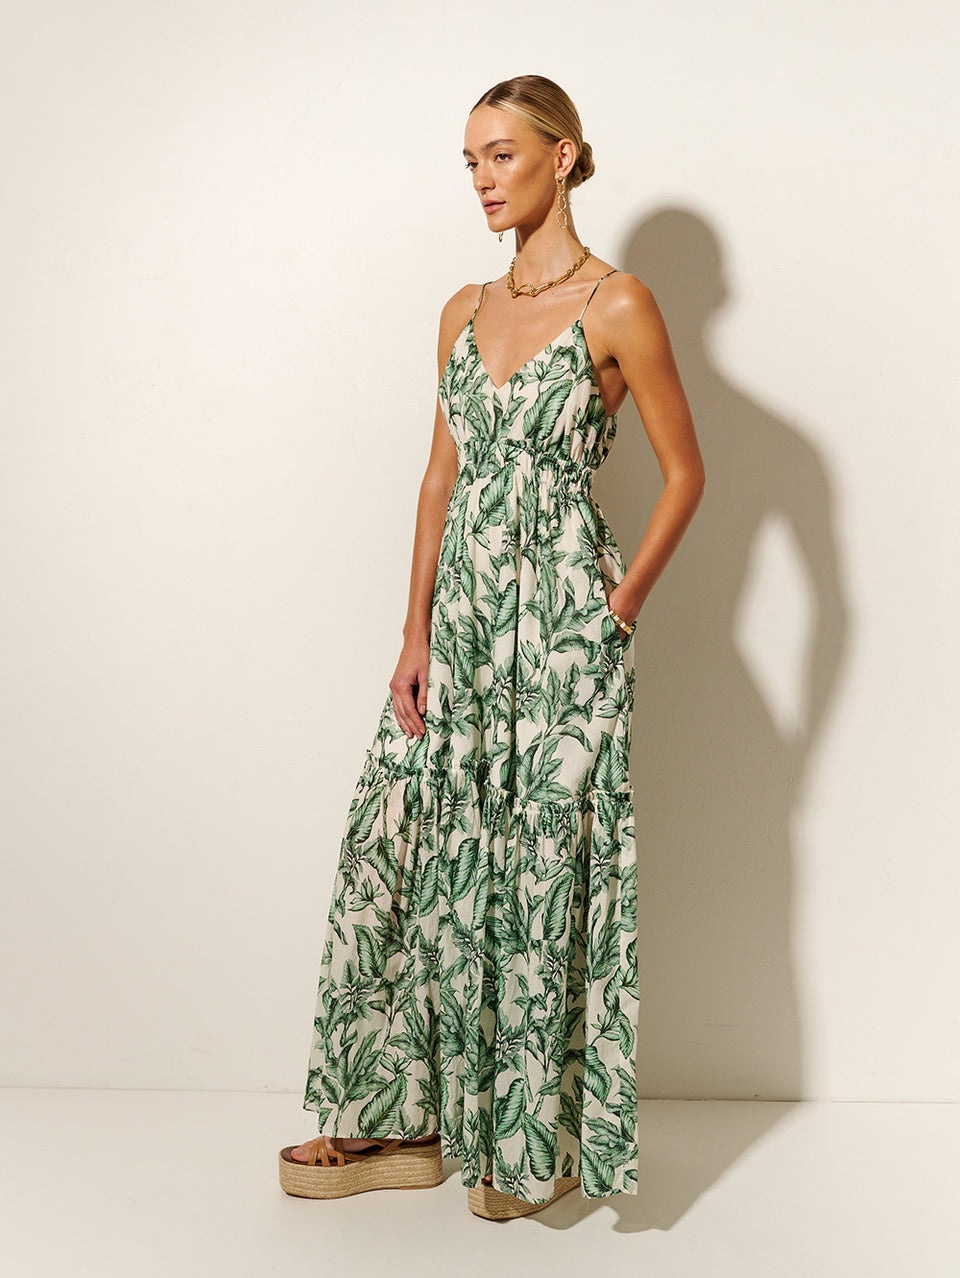 Tropico Maxi Dress KIVARI | Model wears palm leaf printed maxi dress side view